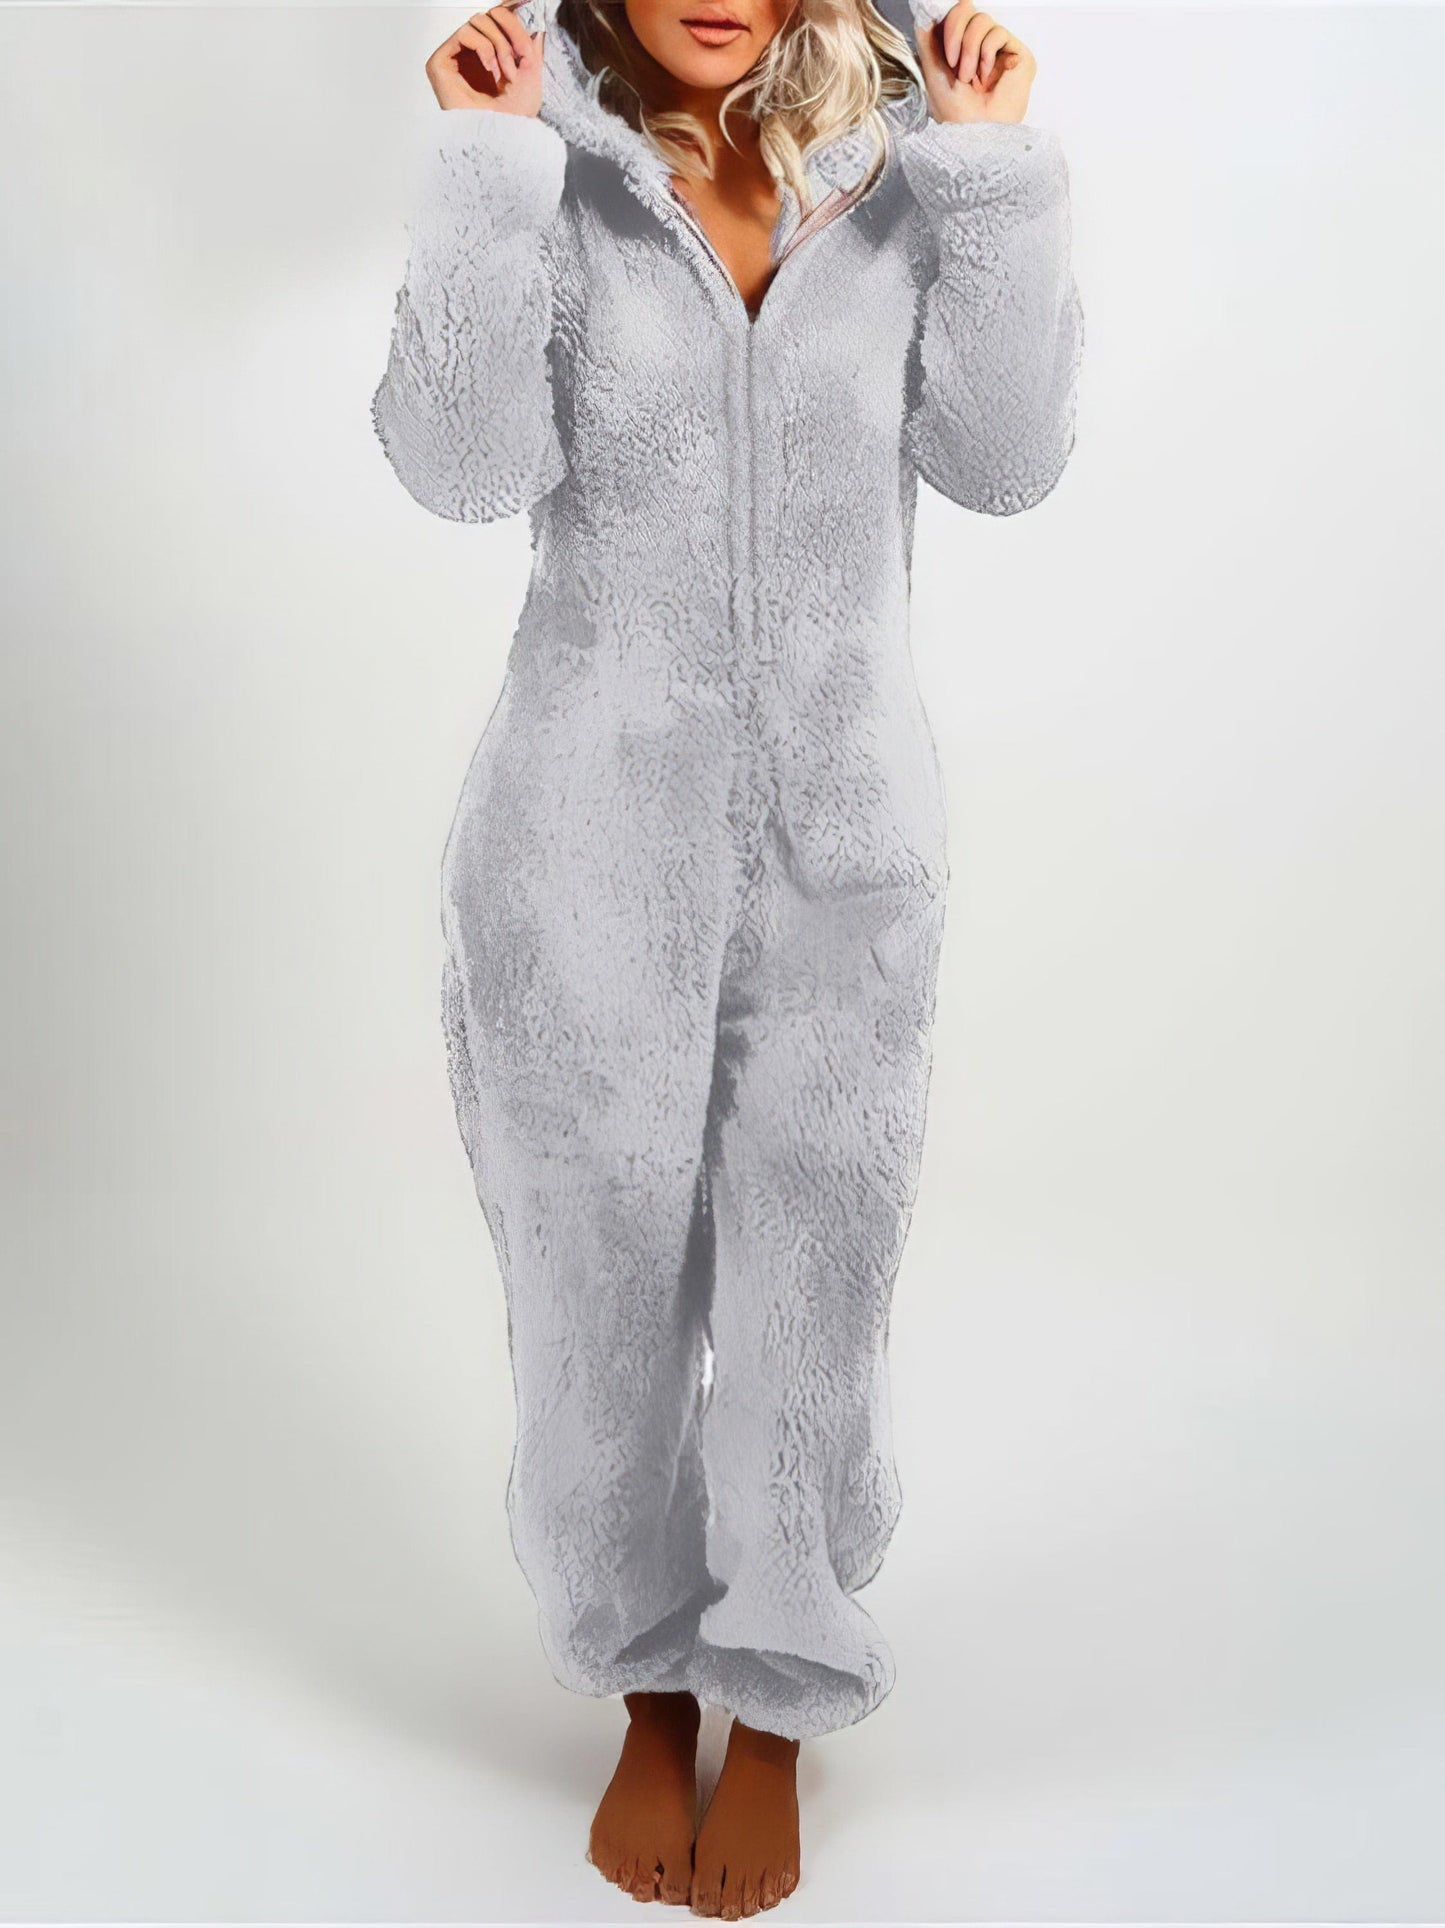 Furry Zipper Jumpsuit Hooded Pajamas